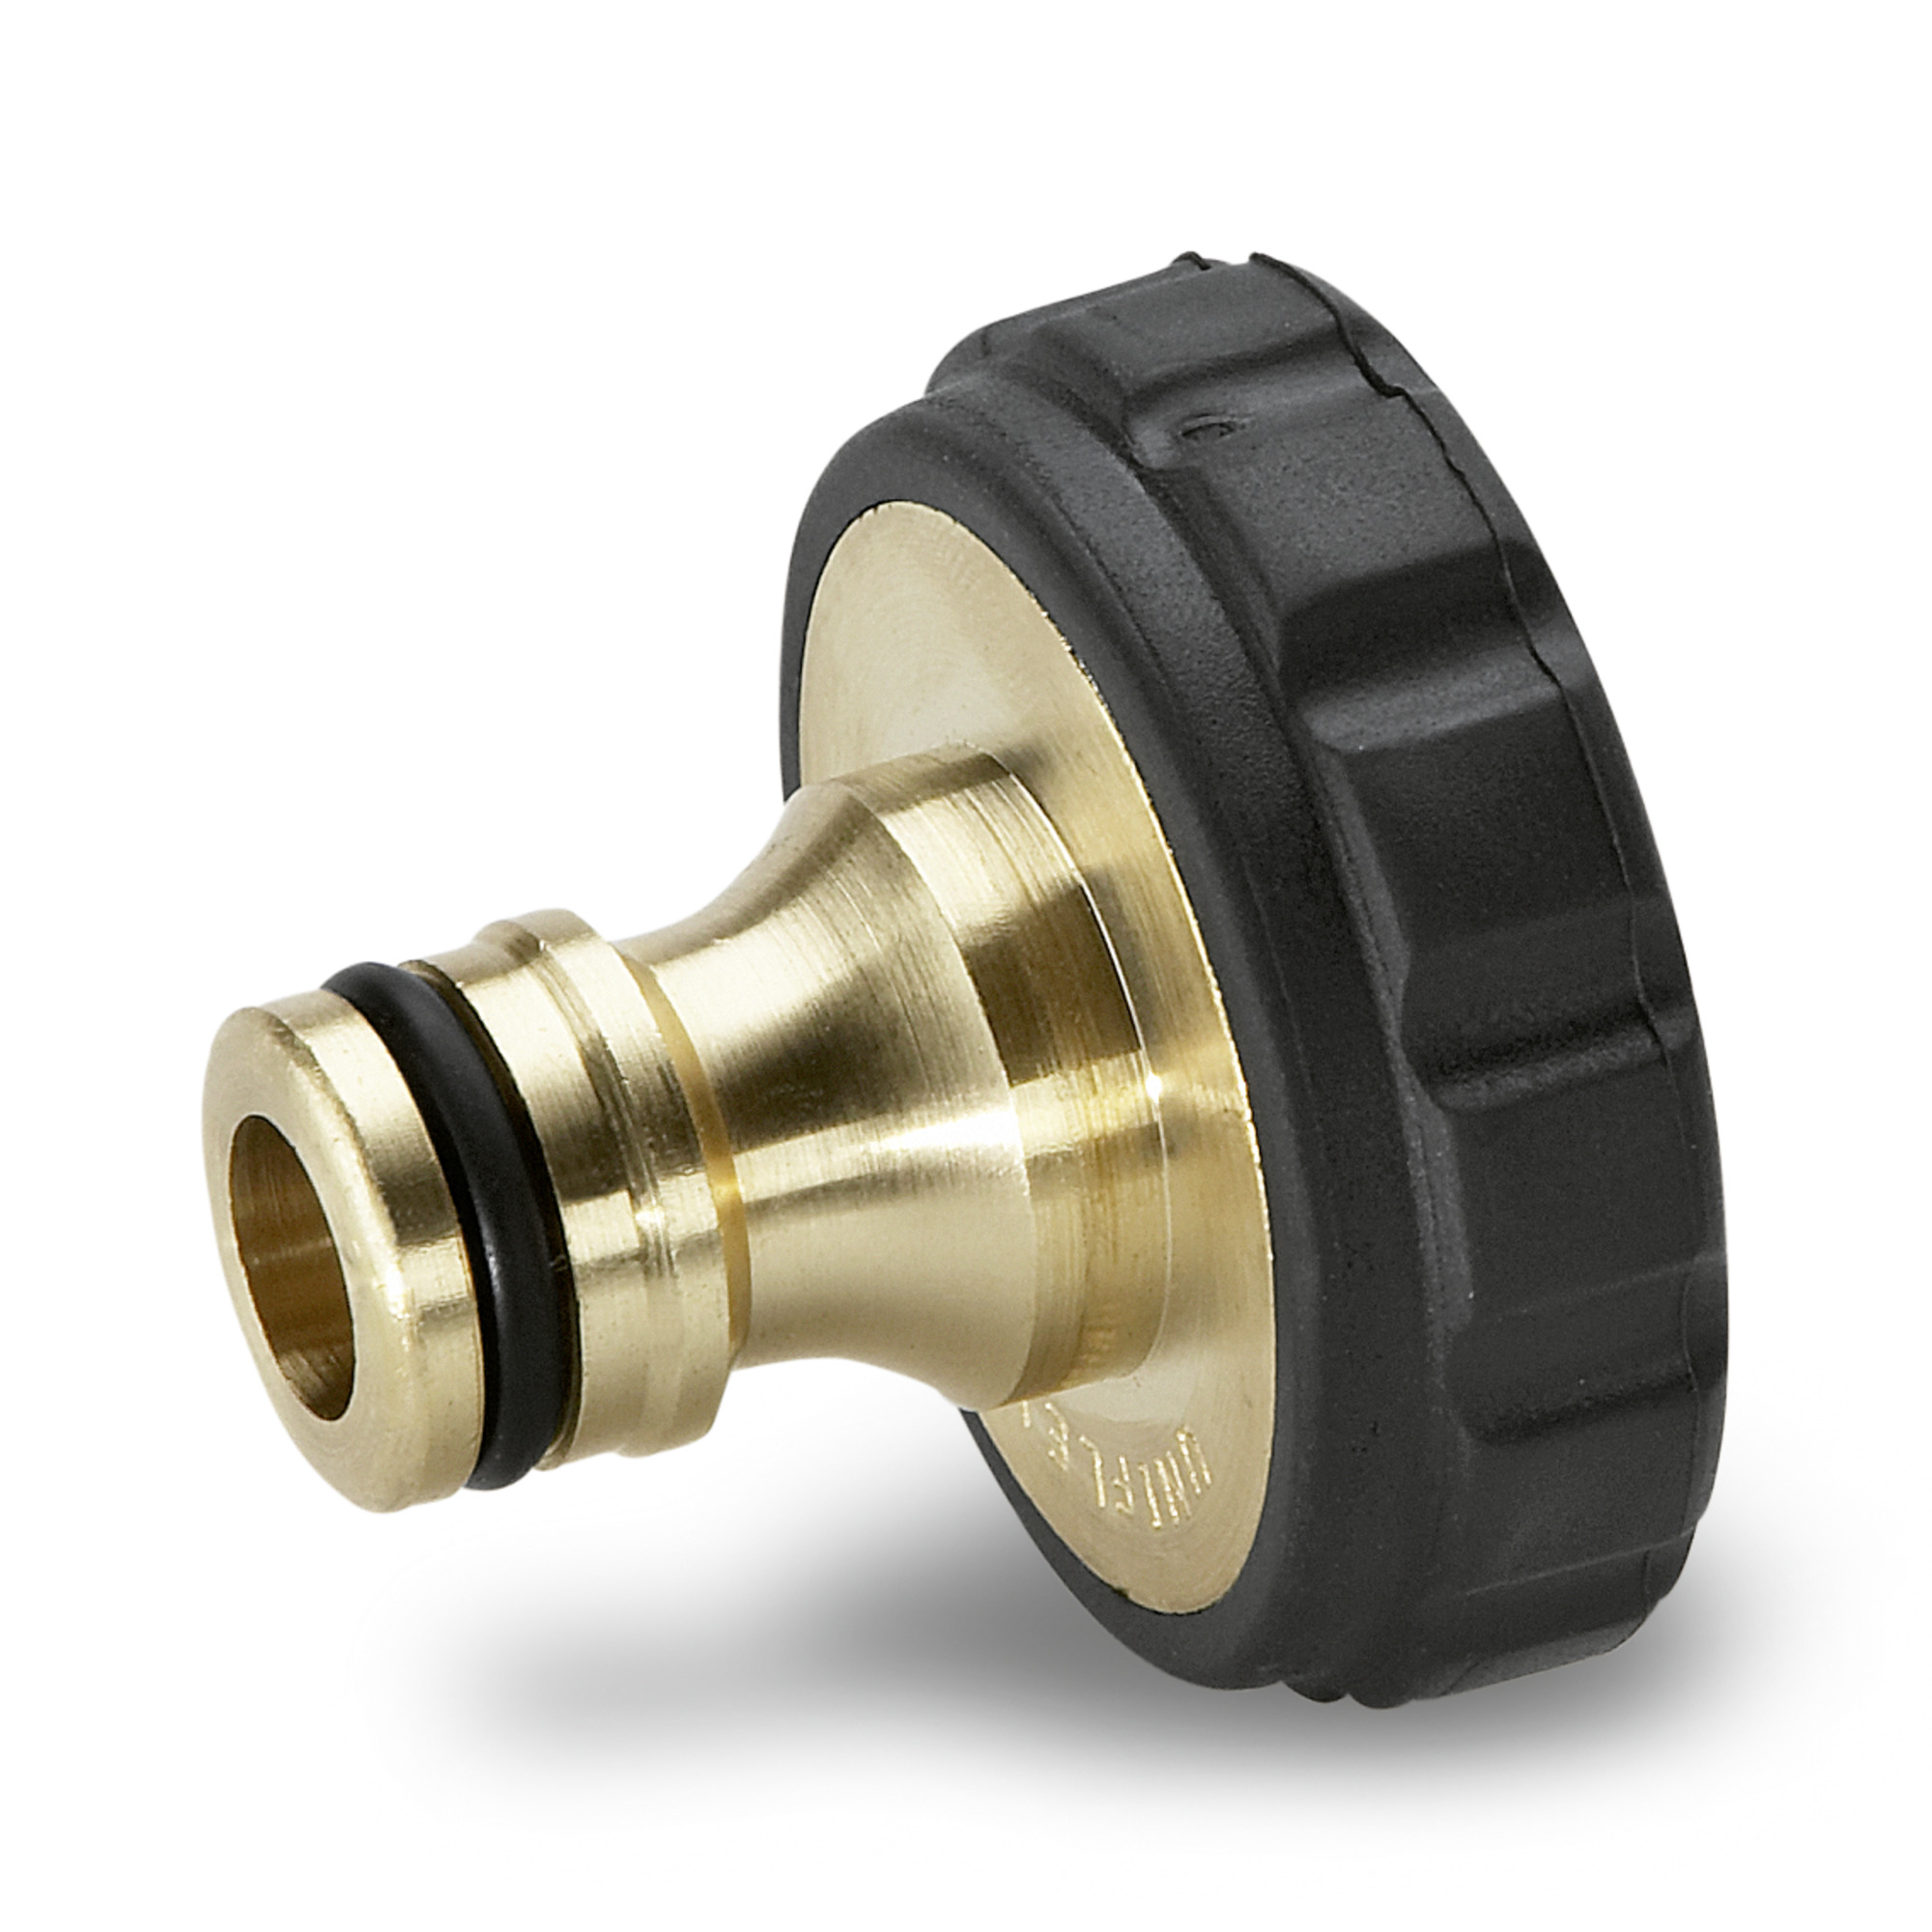 Kaercher Brass tap connector 1" thread